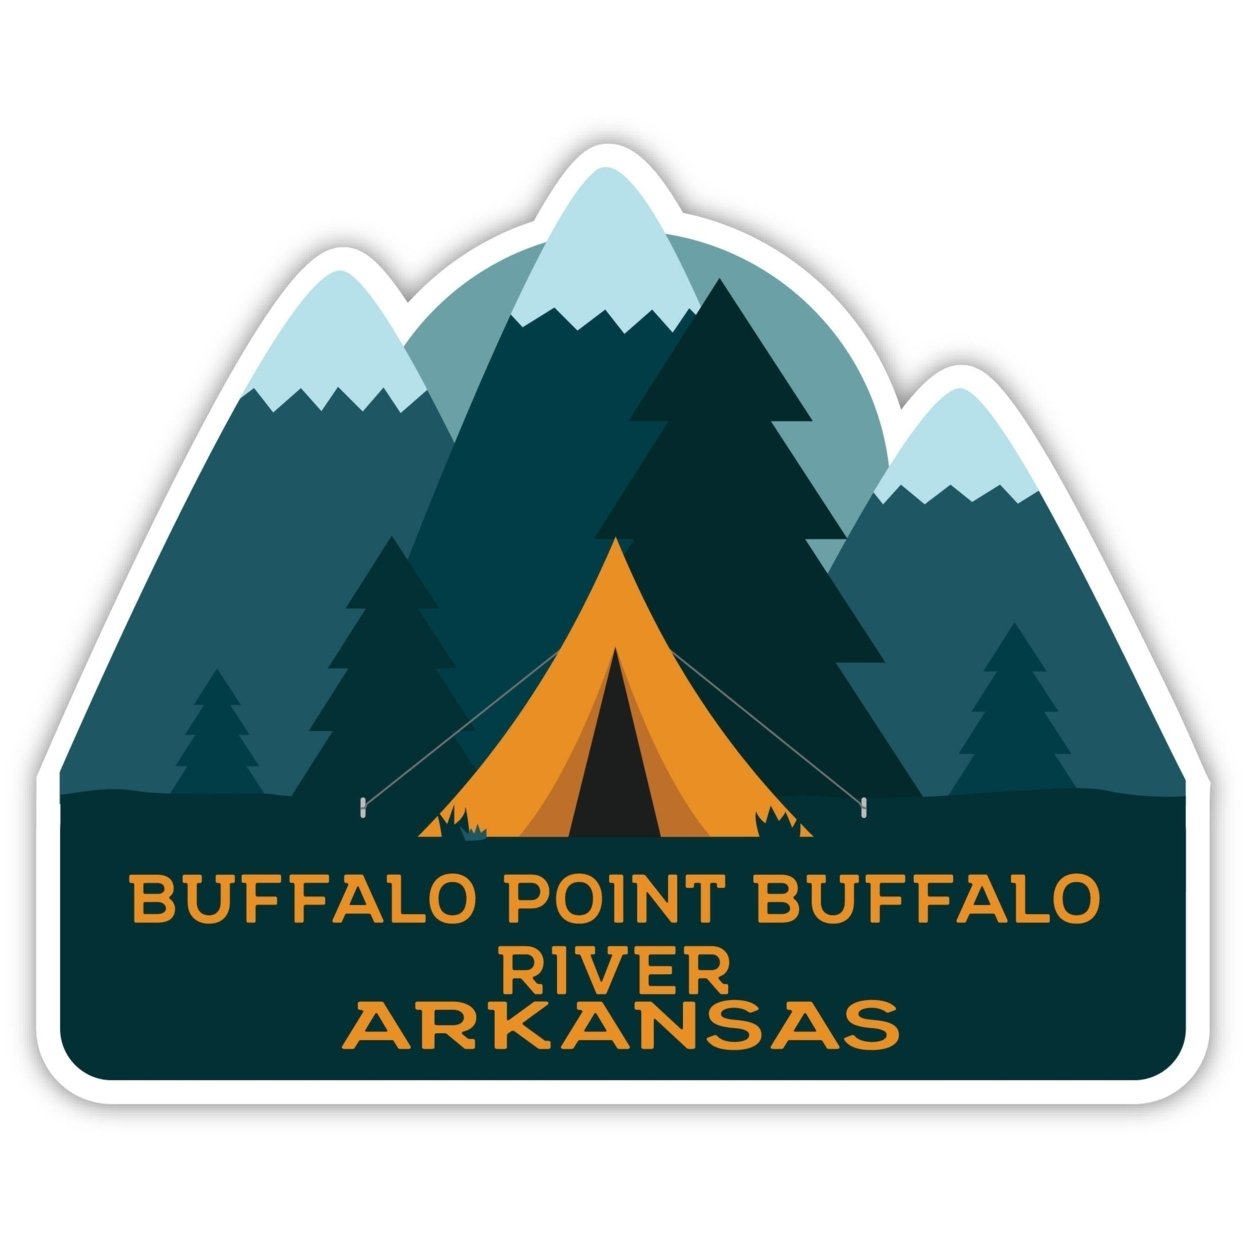 Buffalo Point Buffalo River Arkansas Souvenir Decorative Stickers (Choose Theme And Size) - Single Unit, 6-Inch, Tent